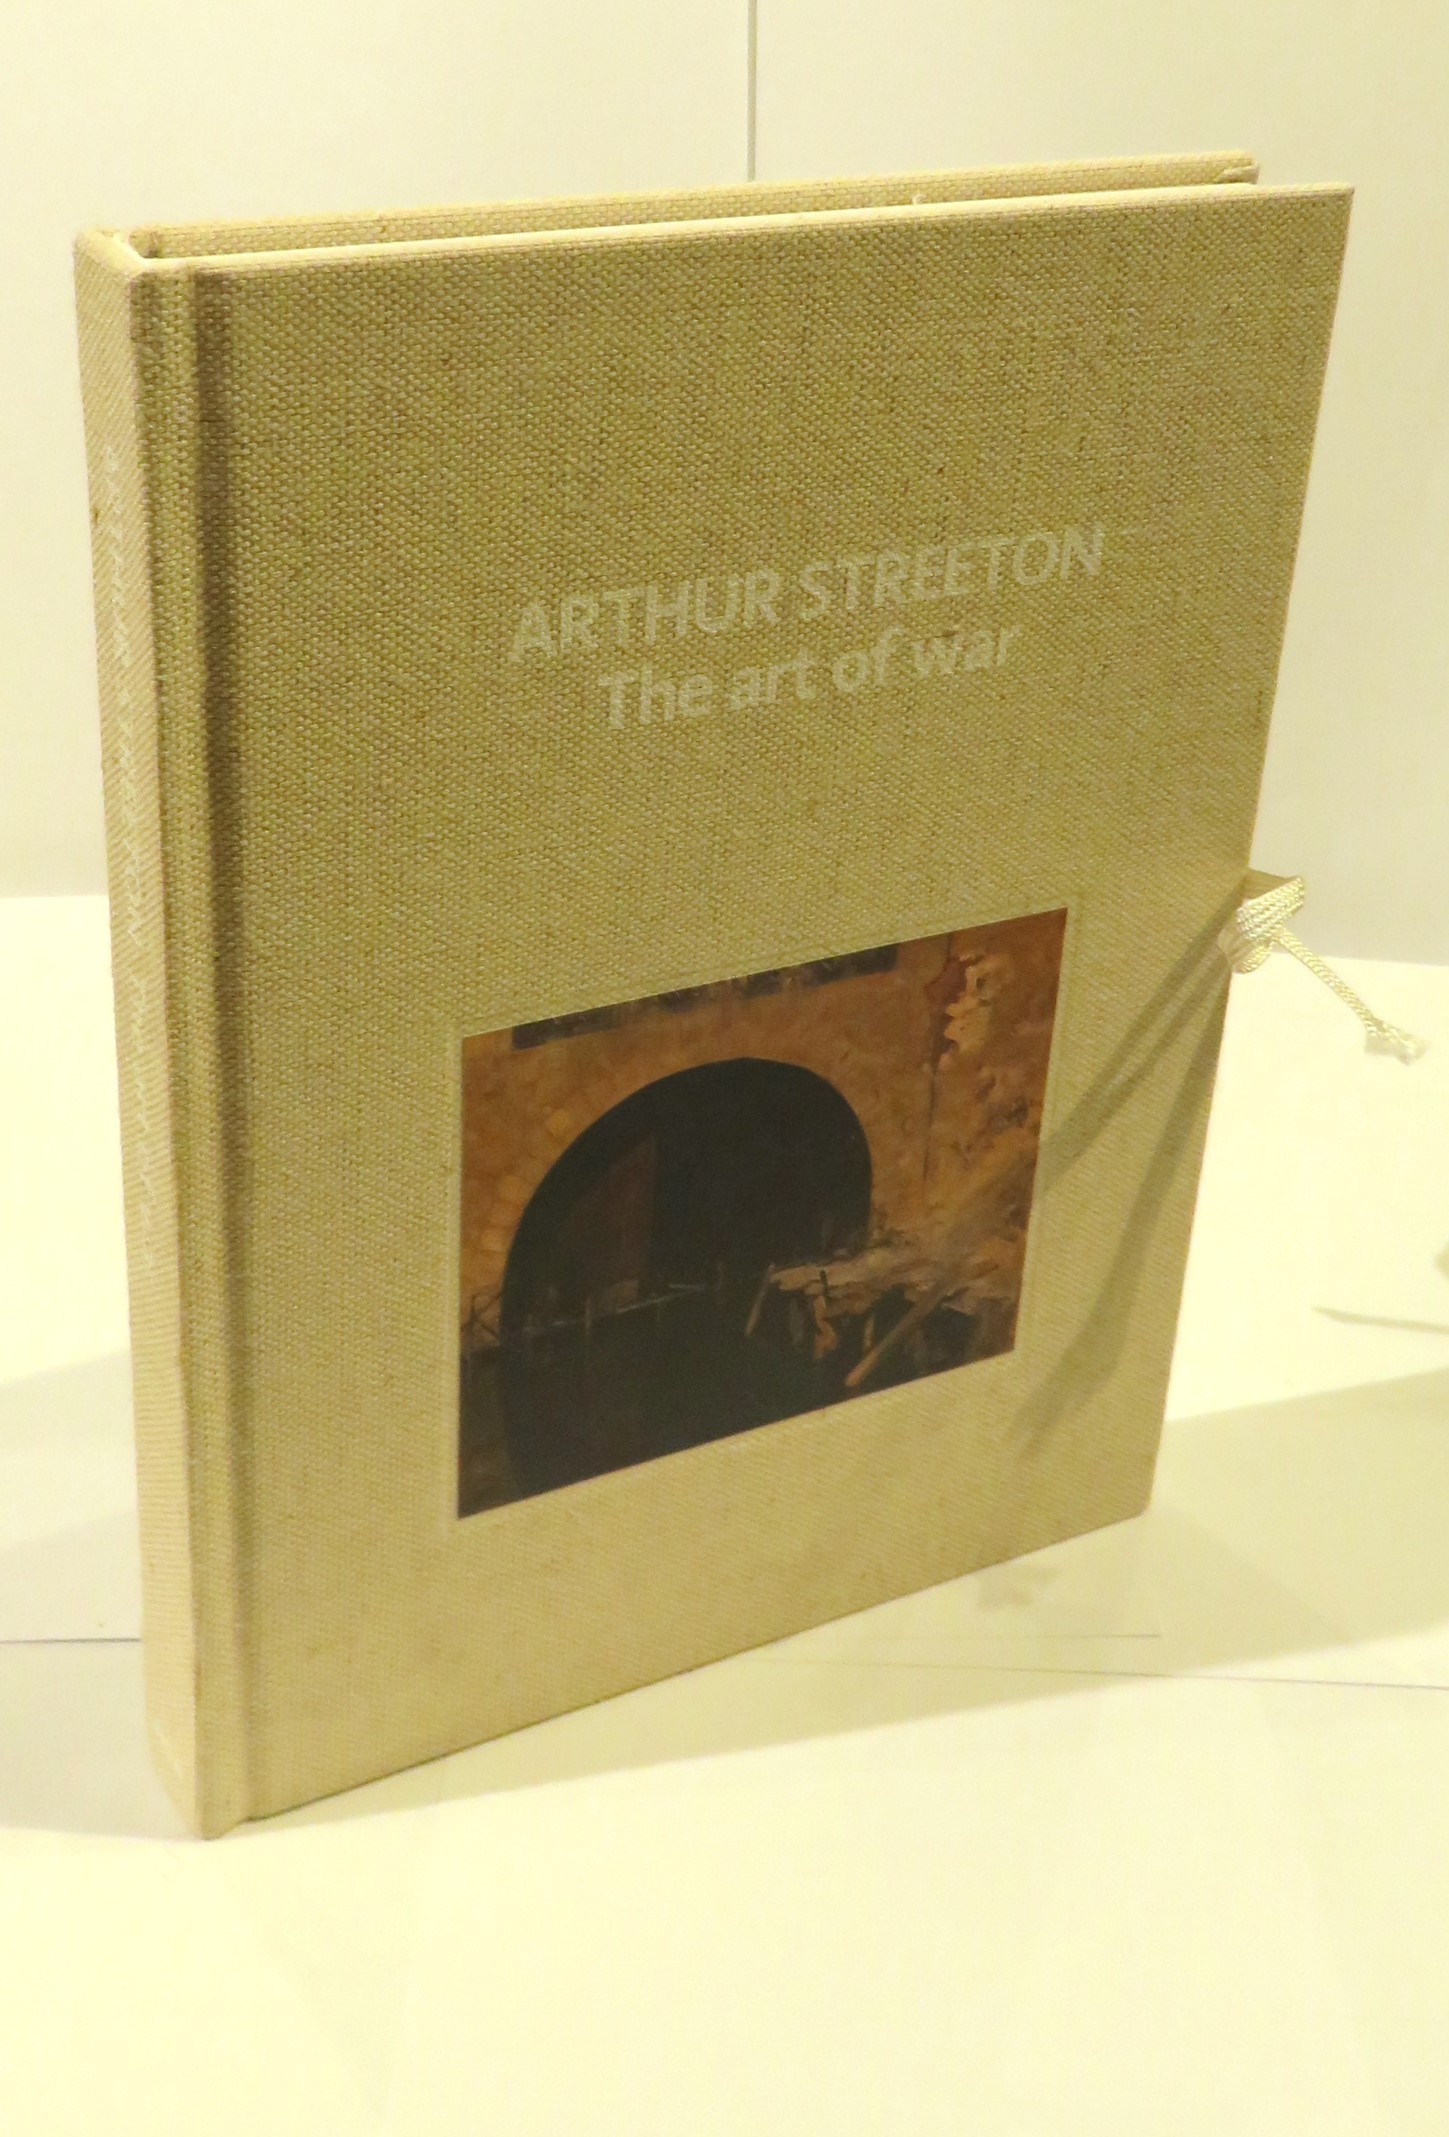 Arthur Streeton: The Art of War